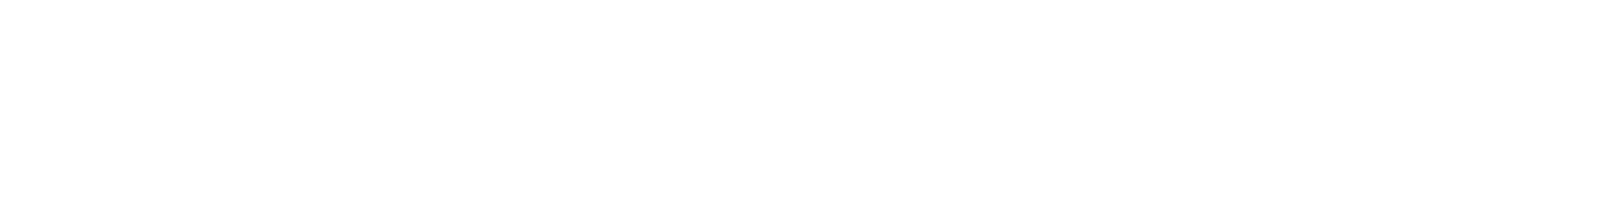 Solibus WorkPlace Logo